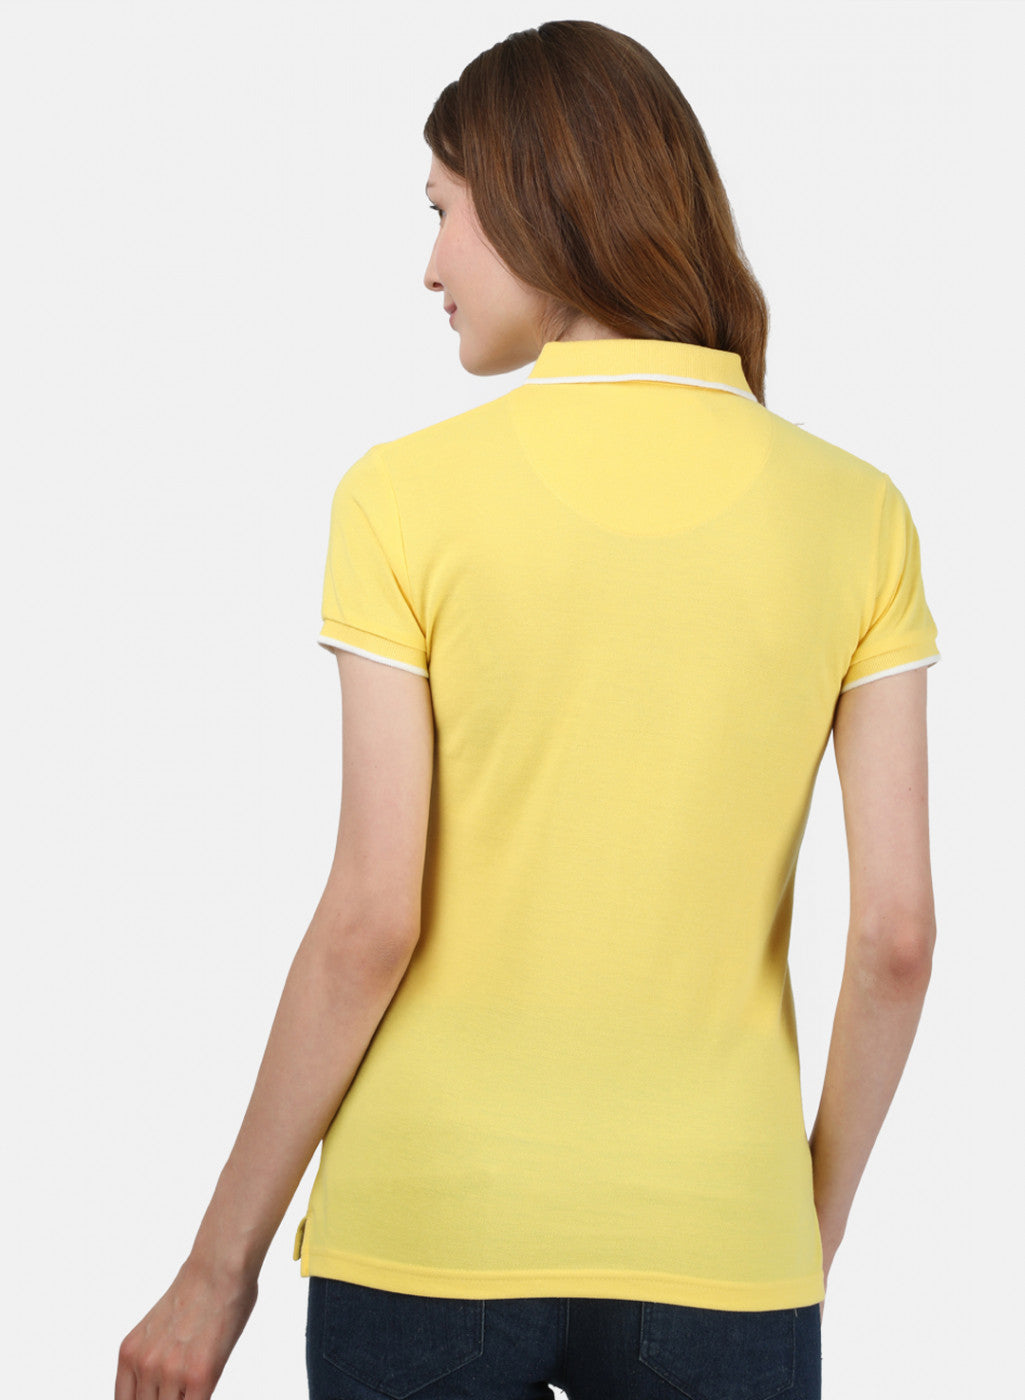 Womens Yellow Plain T-Shirt